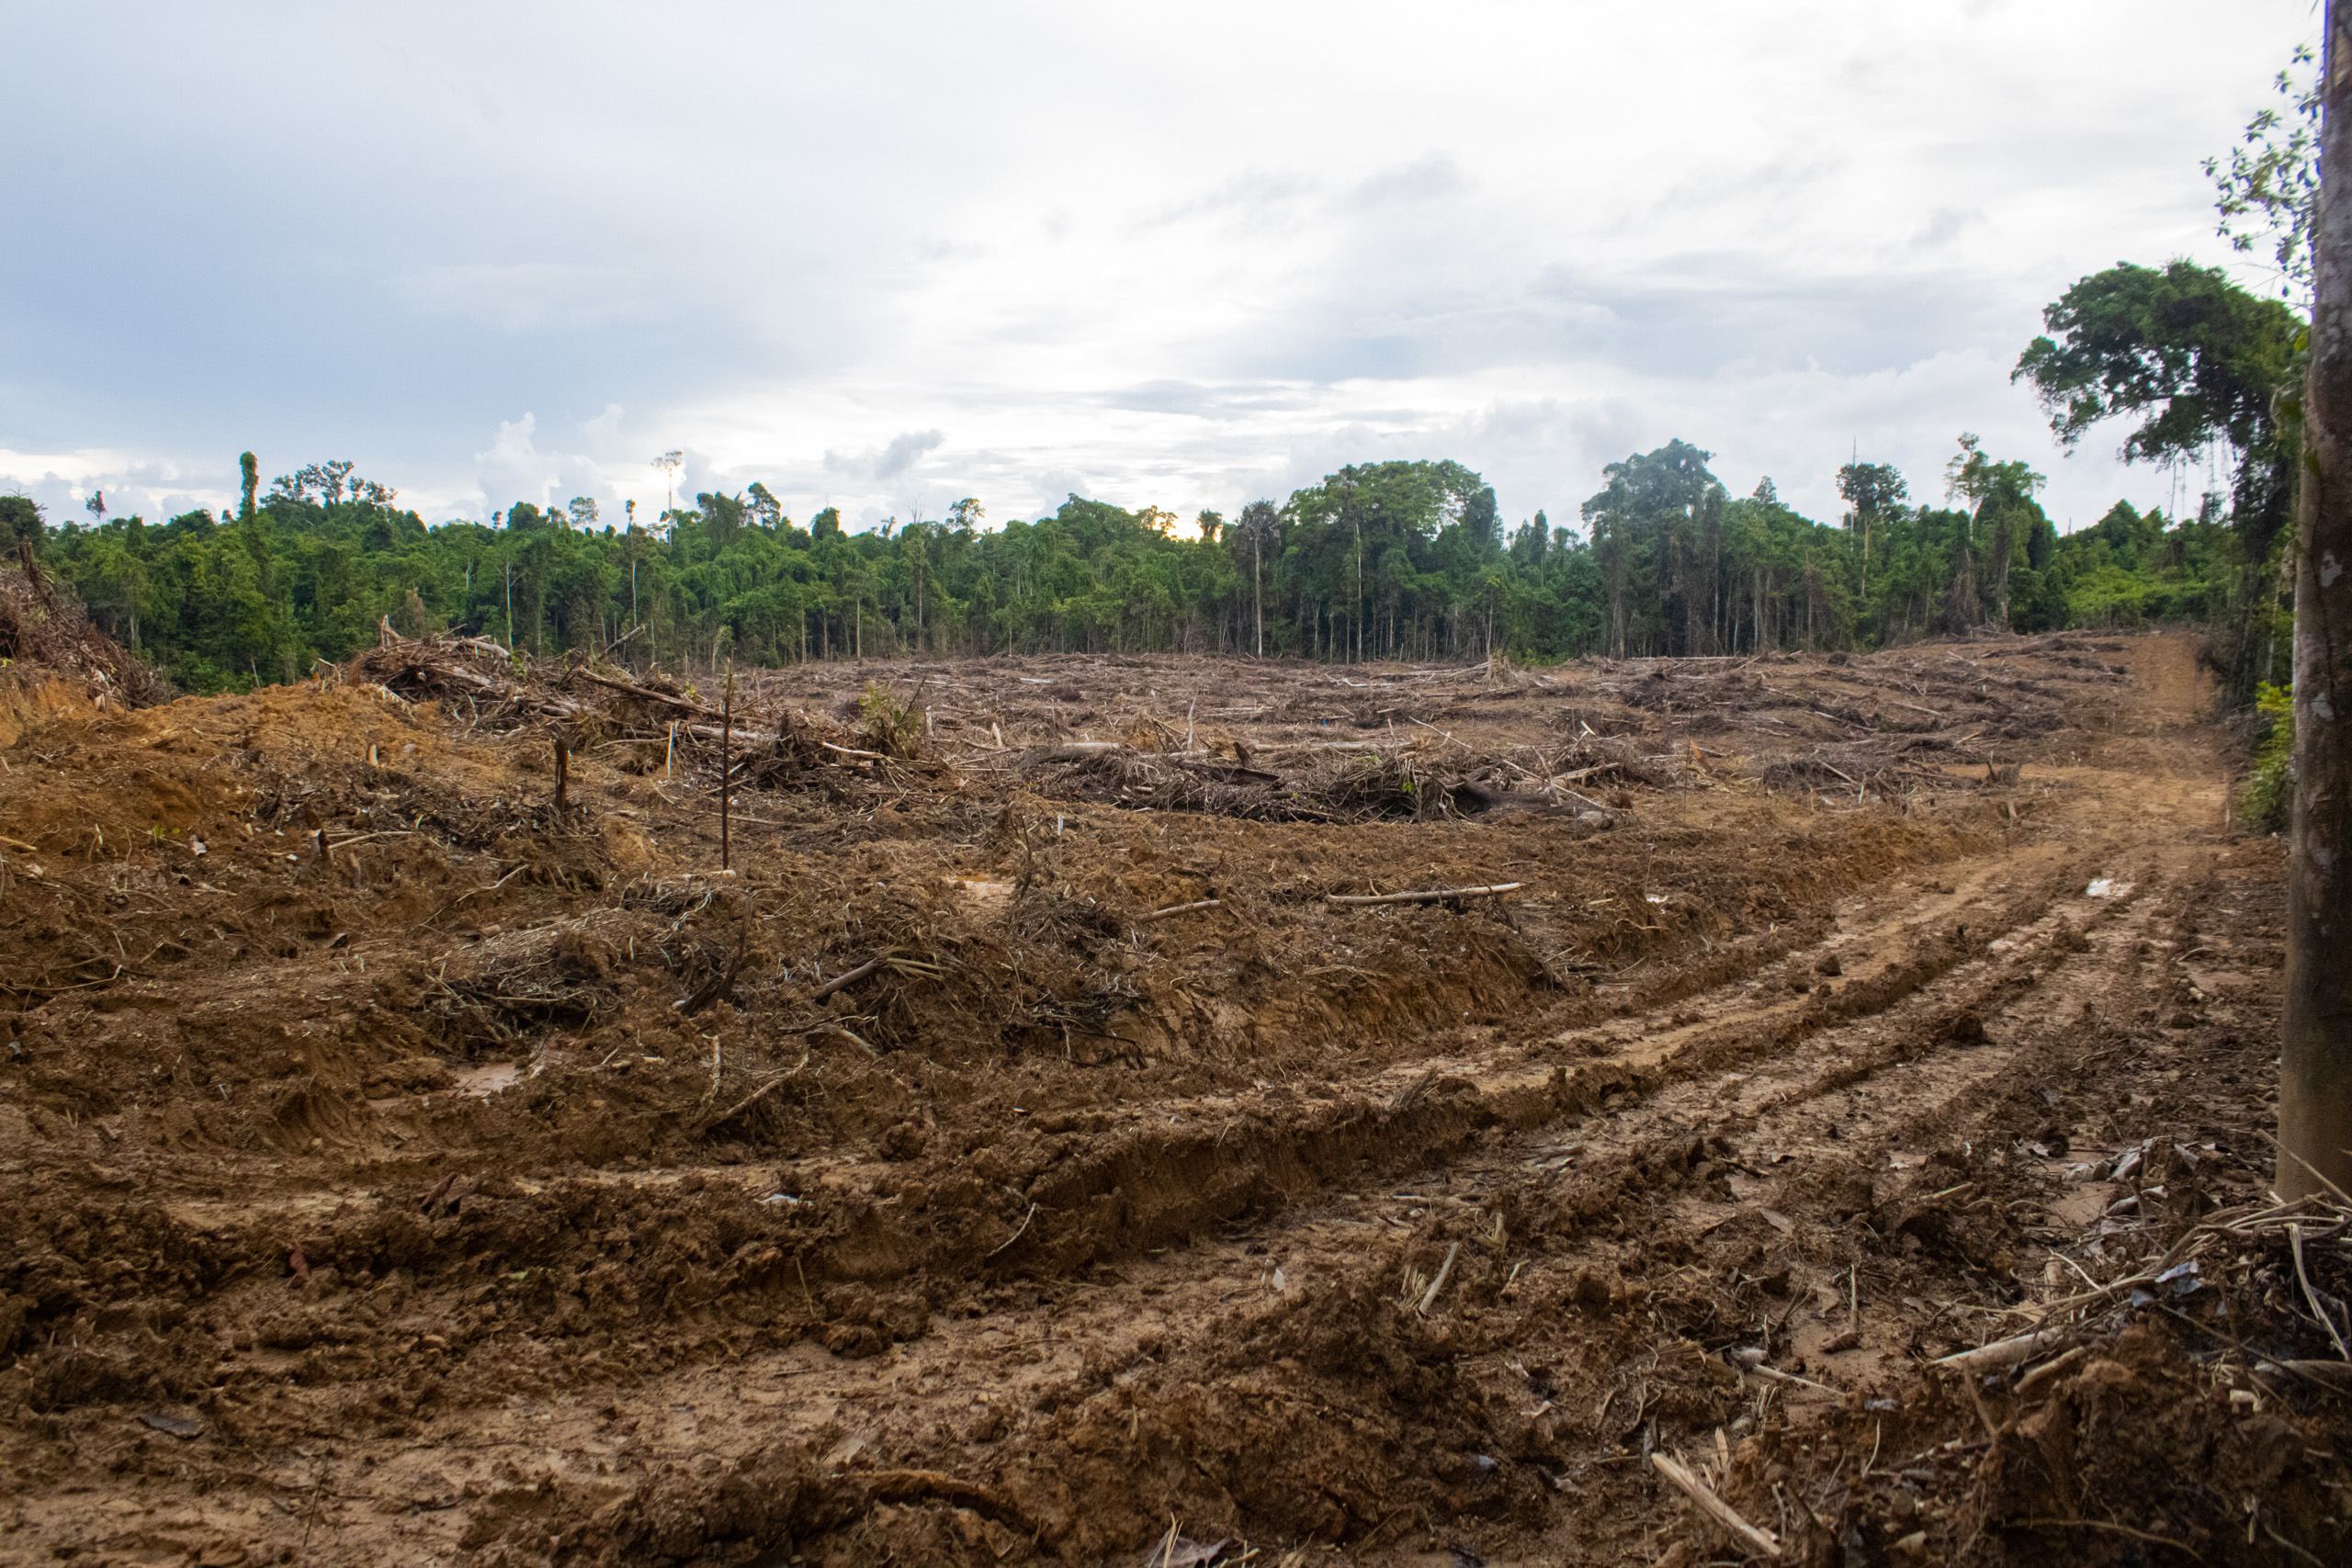 Deforestation for oil palm development in an area near Segun village